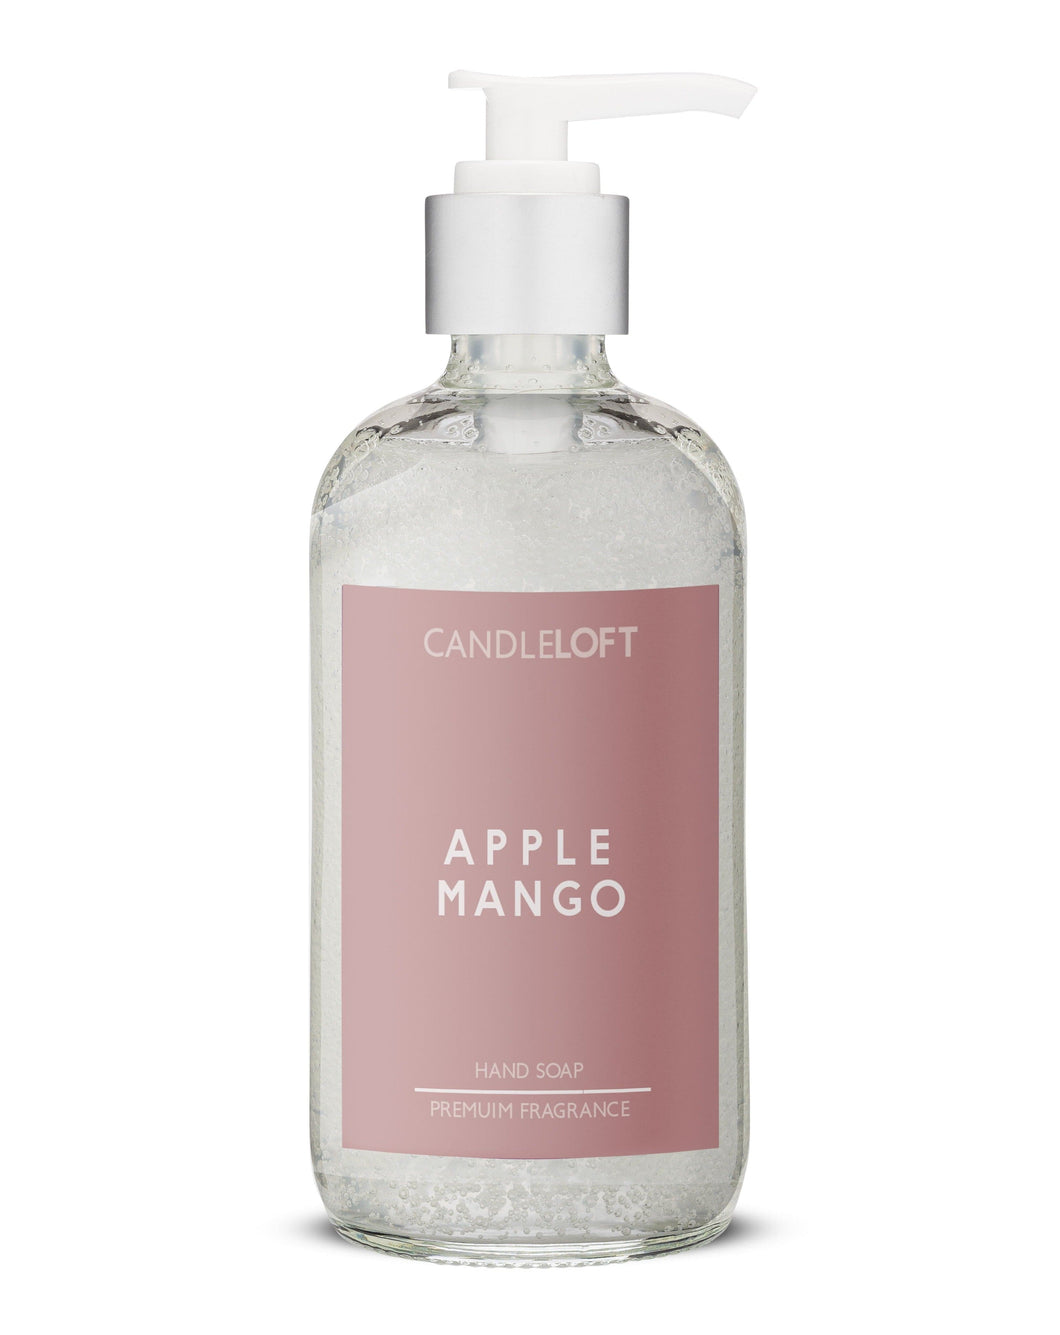 The Candle Loft Hand Soap Apple Mango Hand Soap